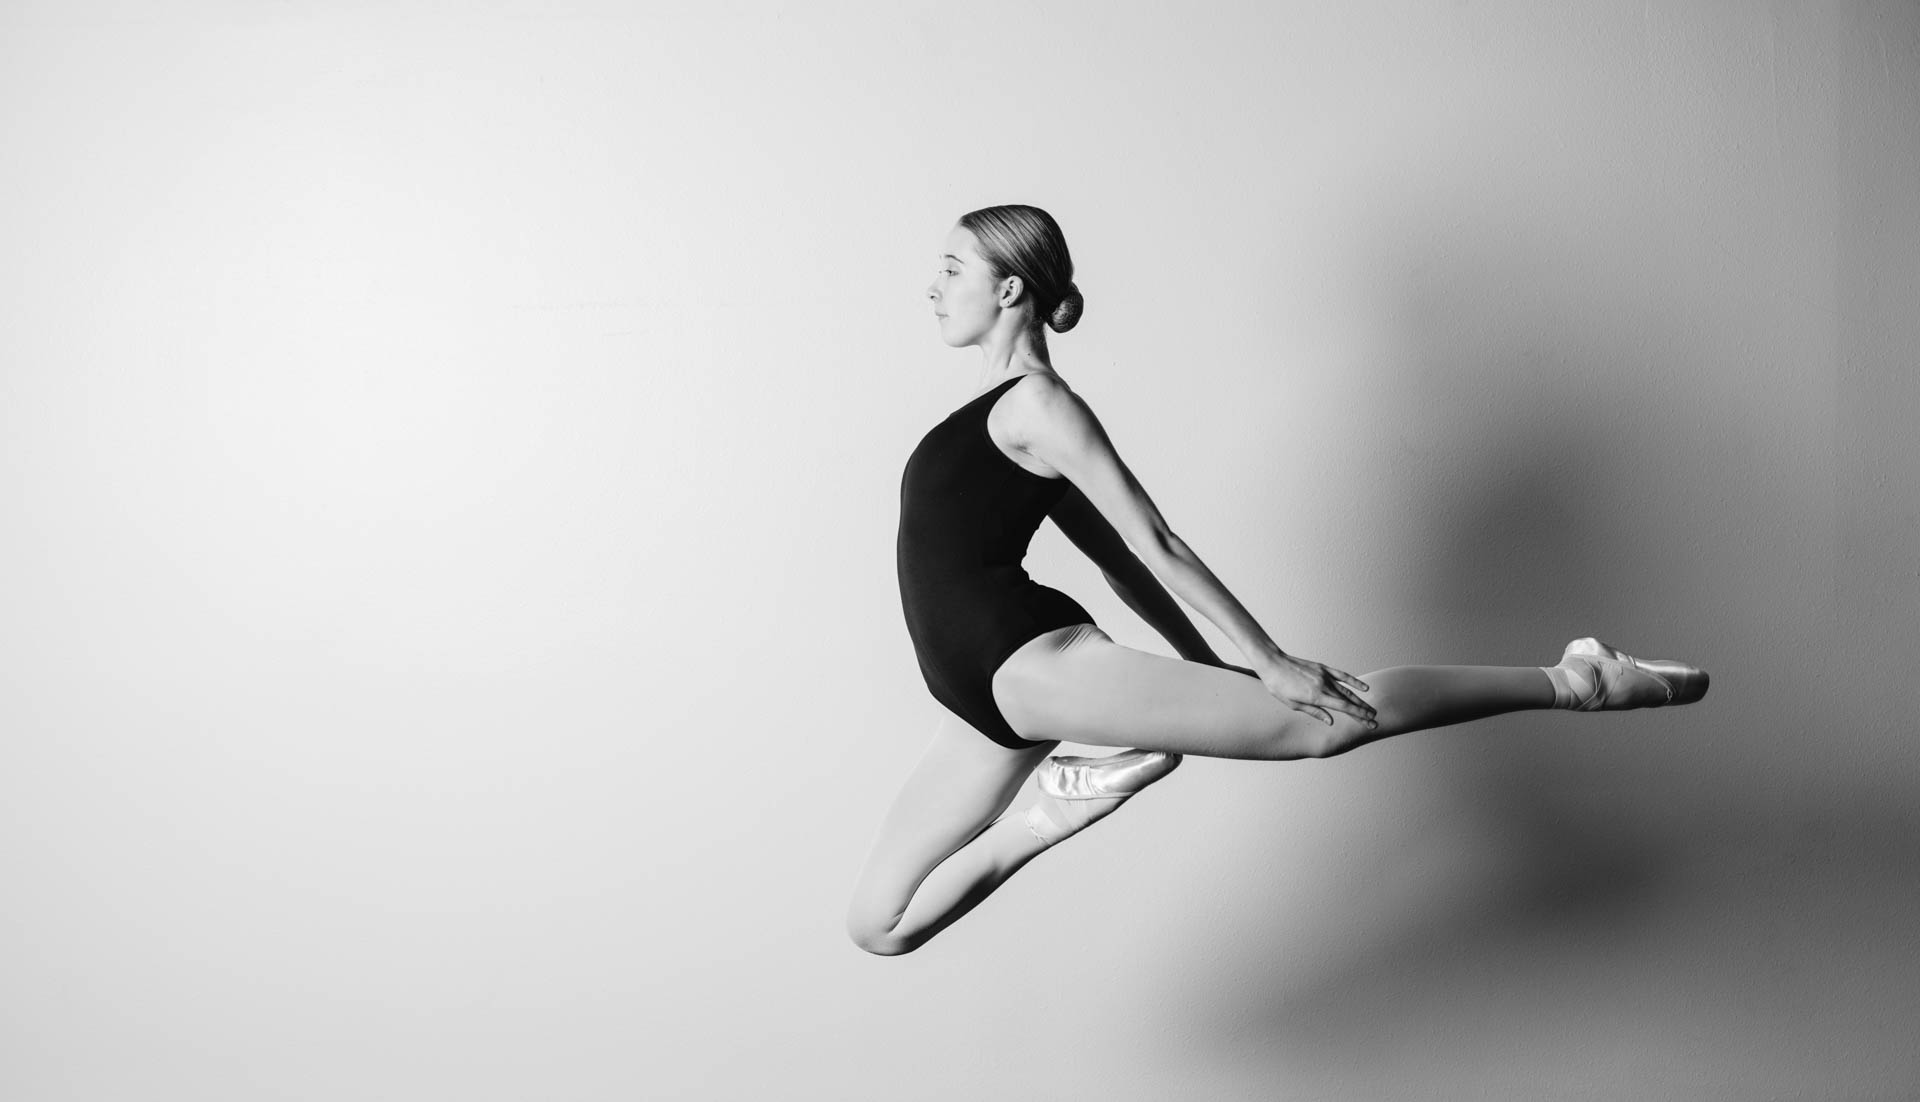 hannah-ballerina-floating-leap-9239